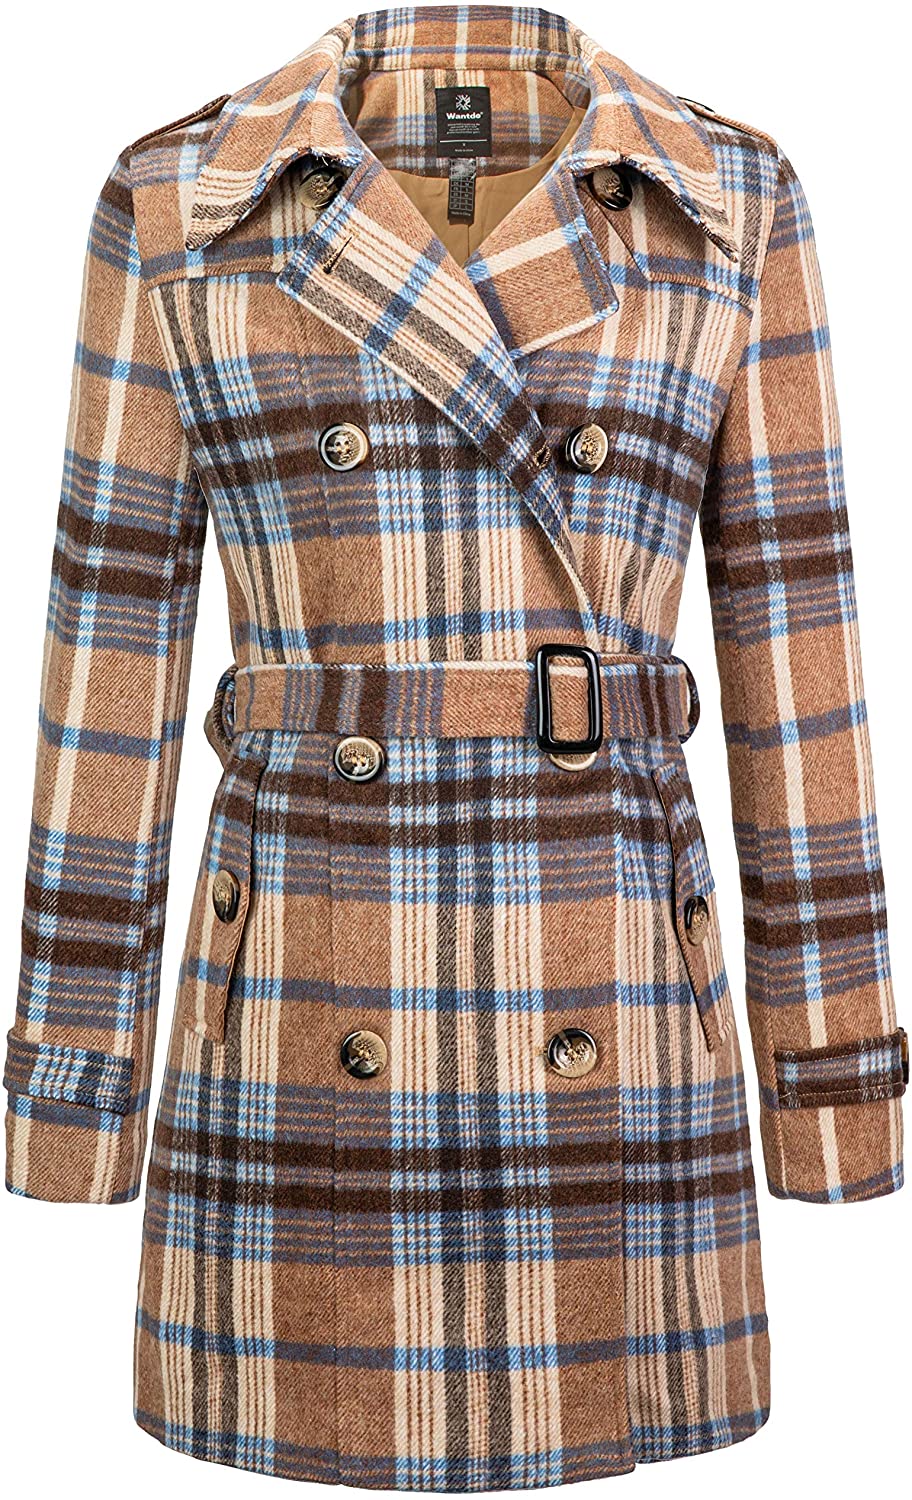 Wantdo Women's Double Breasted Pea Coat Winter Mid-Long Trench Coat with  Belt | eBay